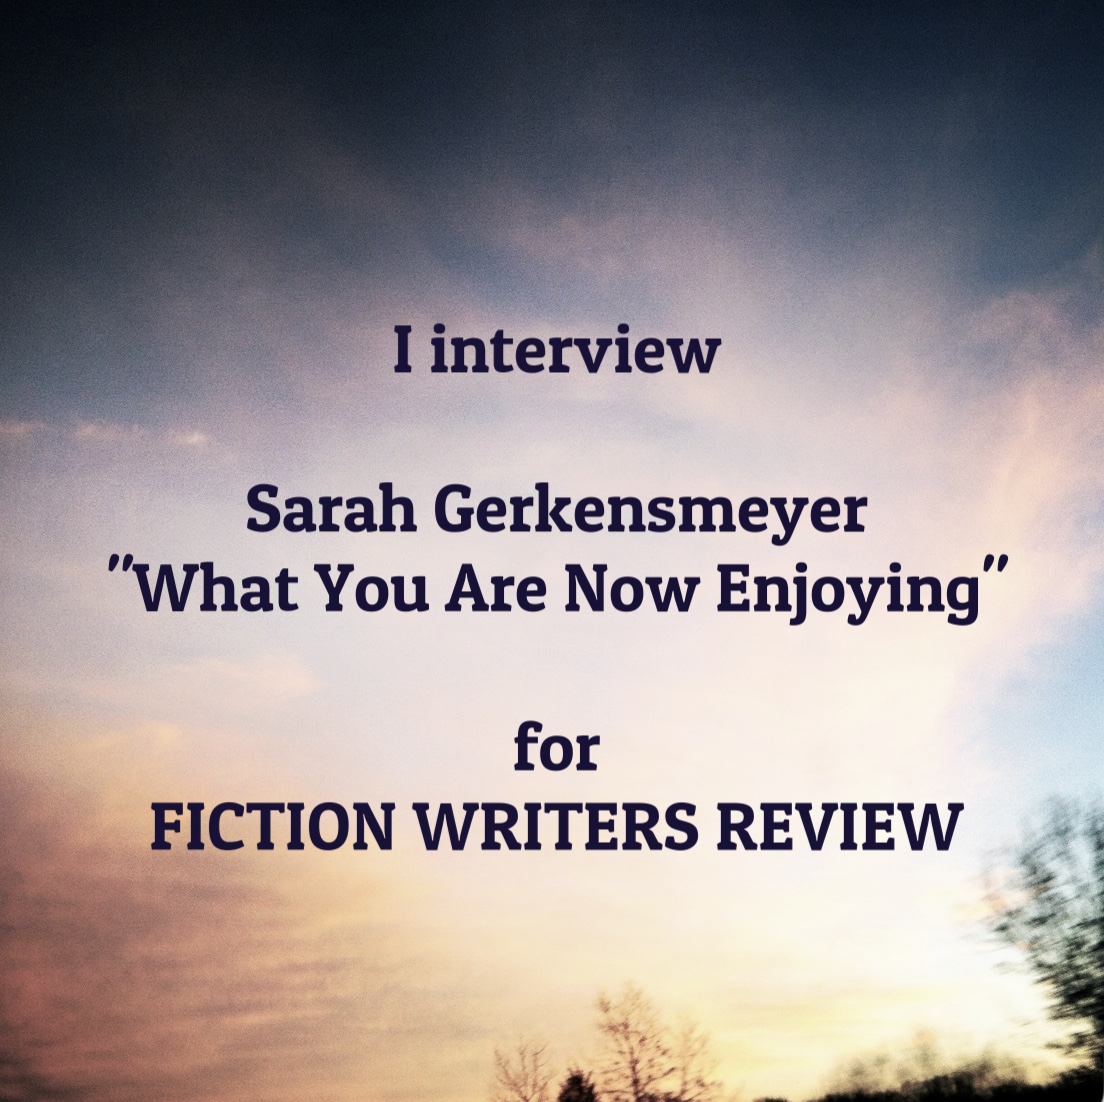 fiction writers review sarah gerkensmeyer maria mutch